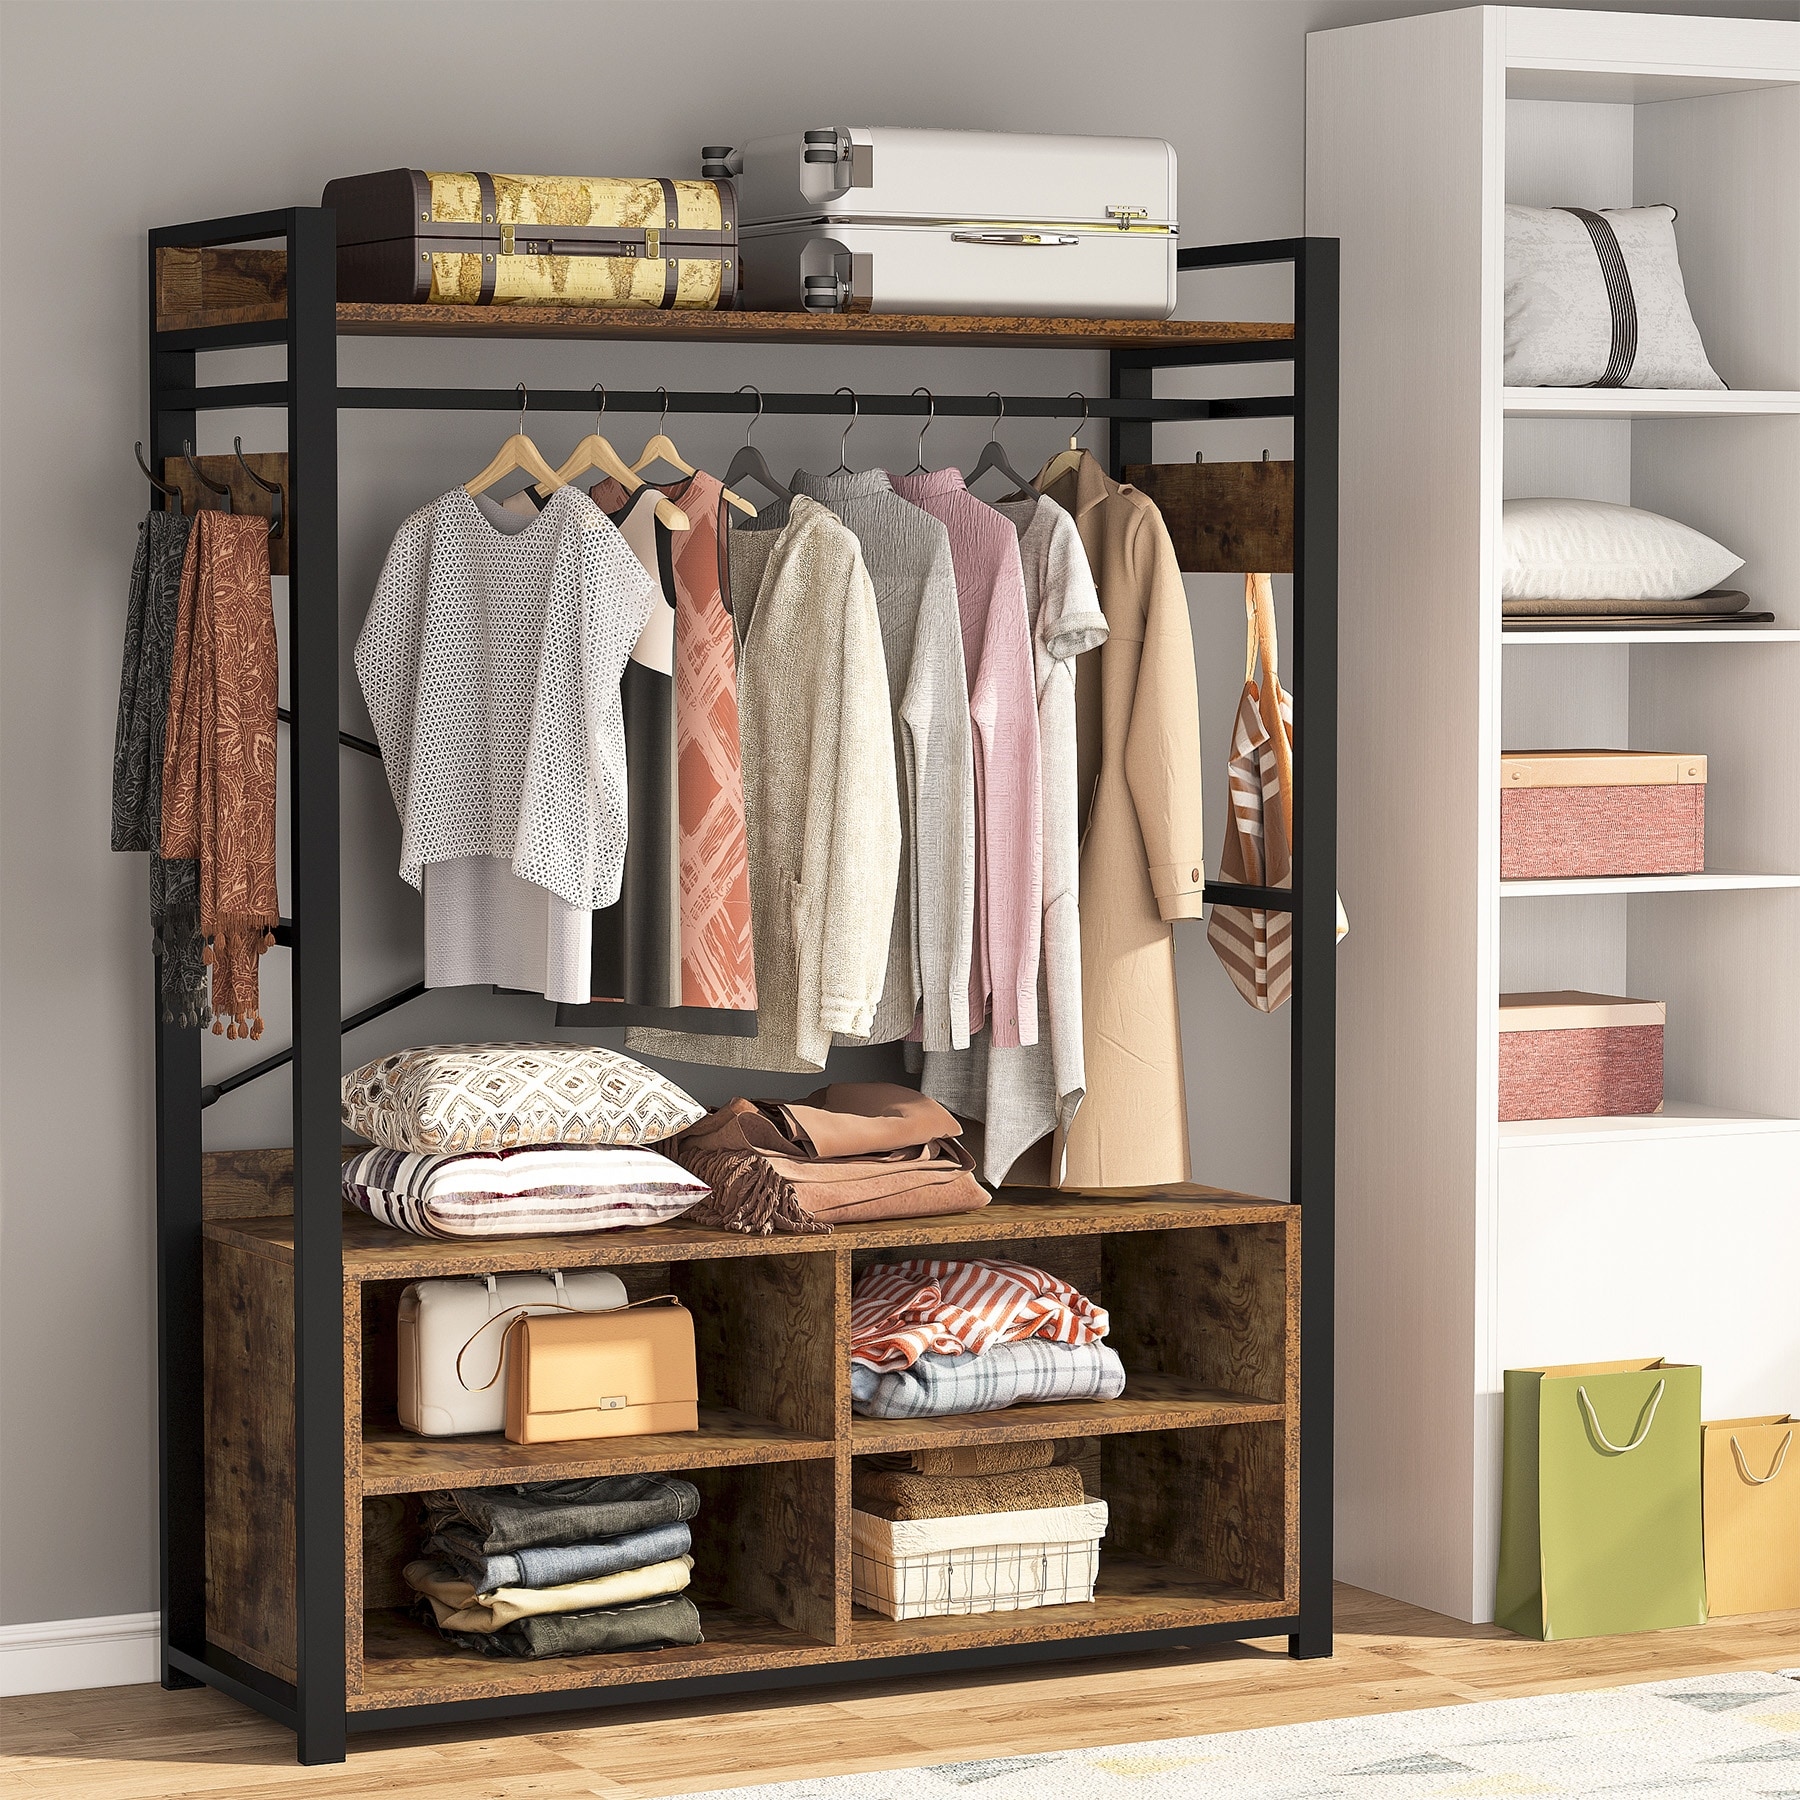 https://ak1.ostkcdn.com/images/products/is/images/direct/3a21eacf6b2ffd8c6bac9c11e285a453c06735f7/Wooden-clothing-closet-freestanding-closet-garment-rack-with-shelf.jpg